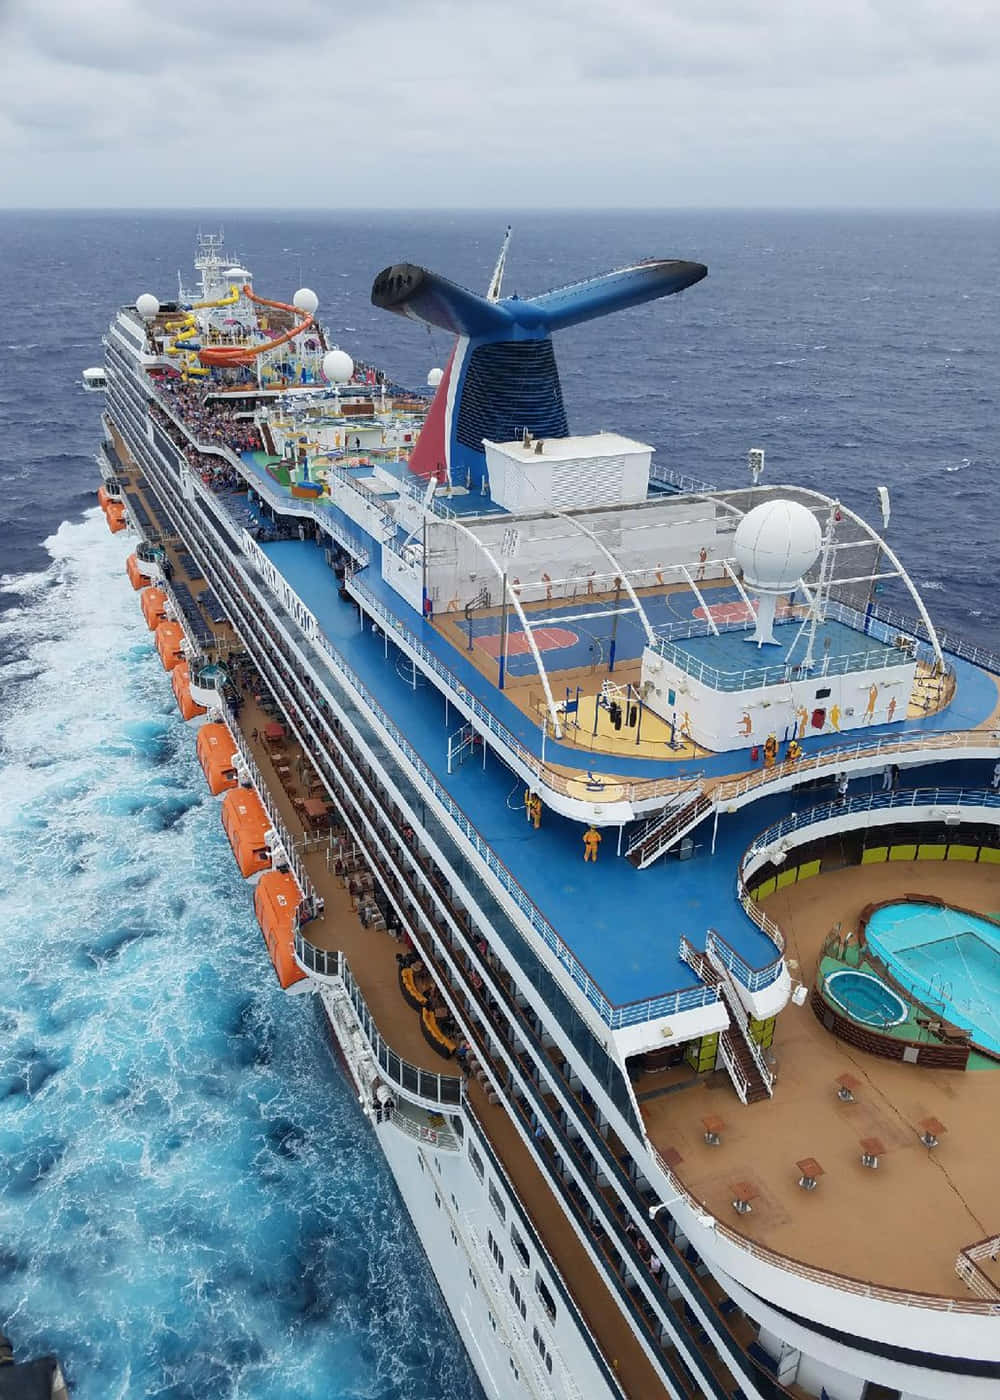 Carnival Cruise Ship In The Ocean